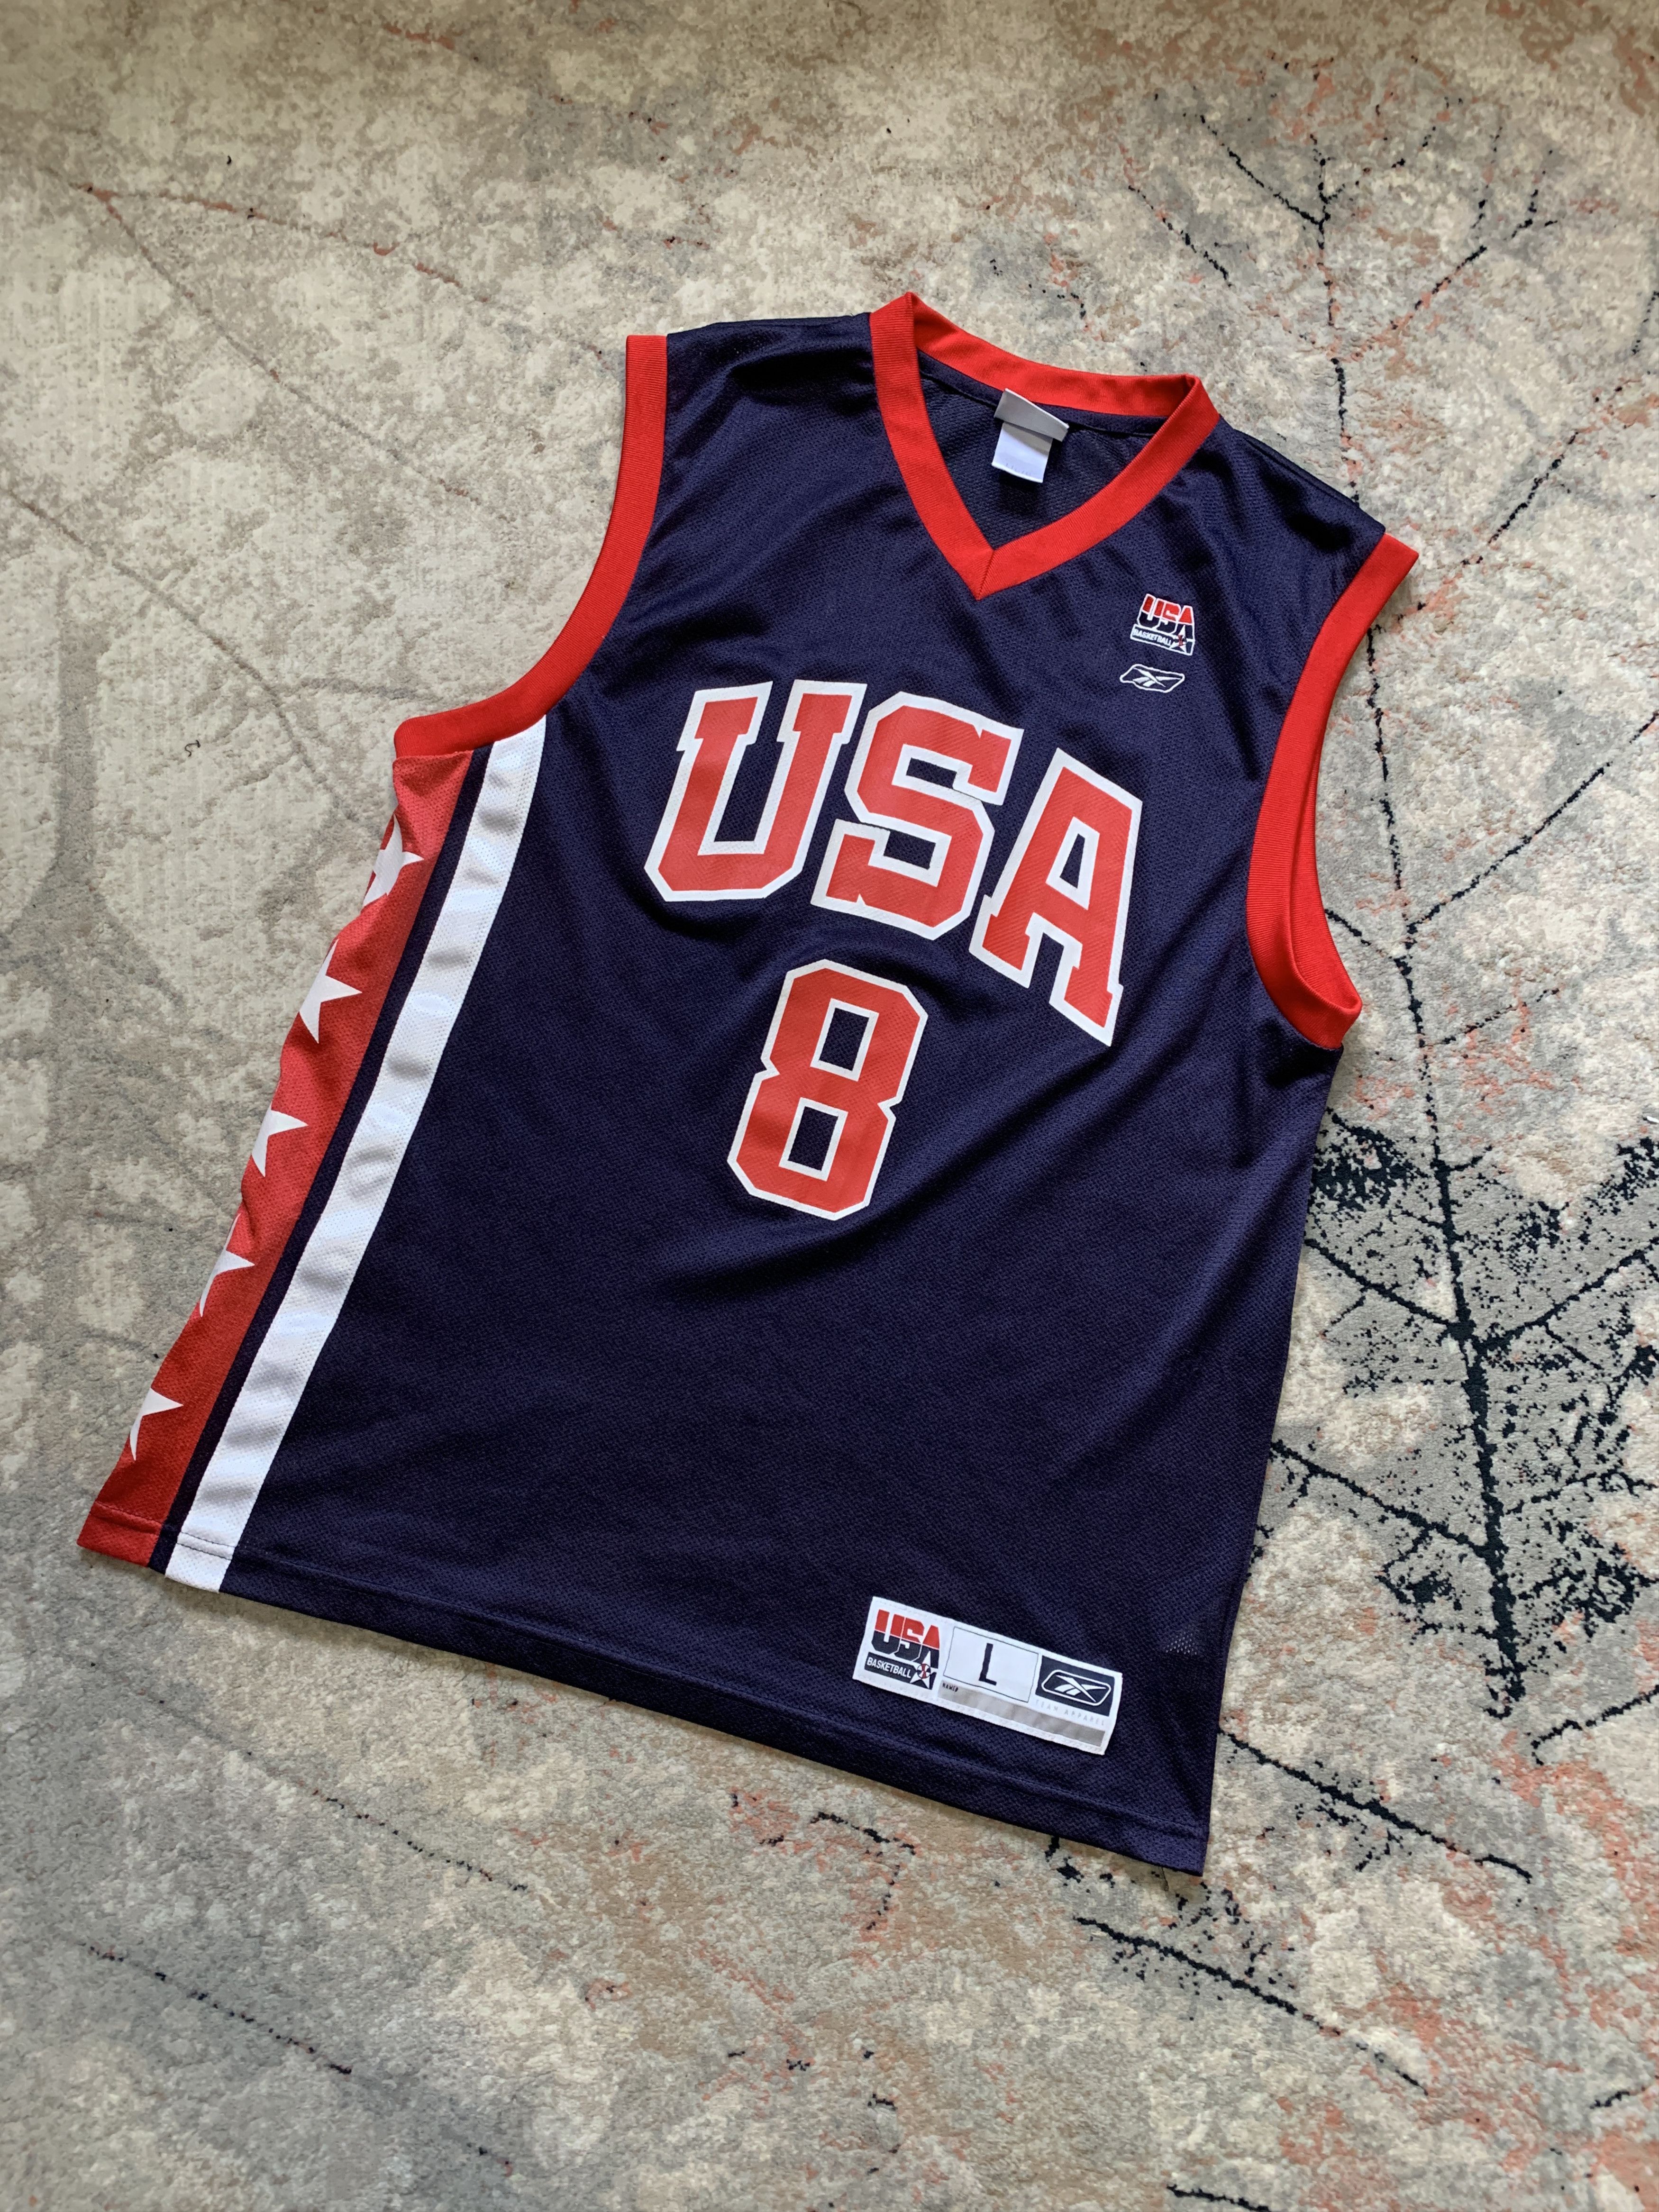 Kobe Bryant #8 Olympic USA Team Basketball NBA Reebok Jersey SizeL